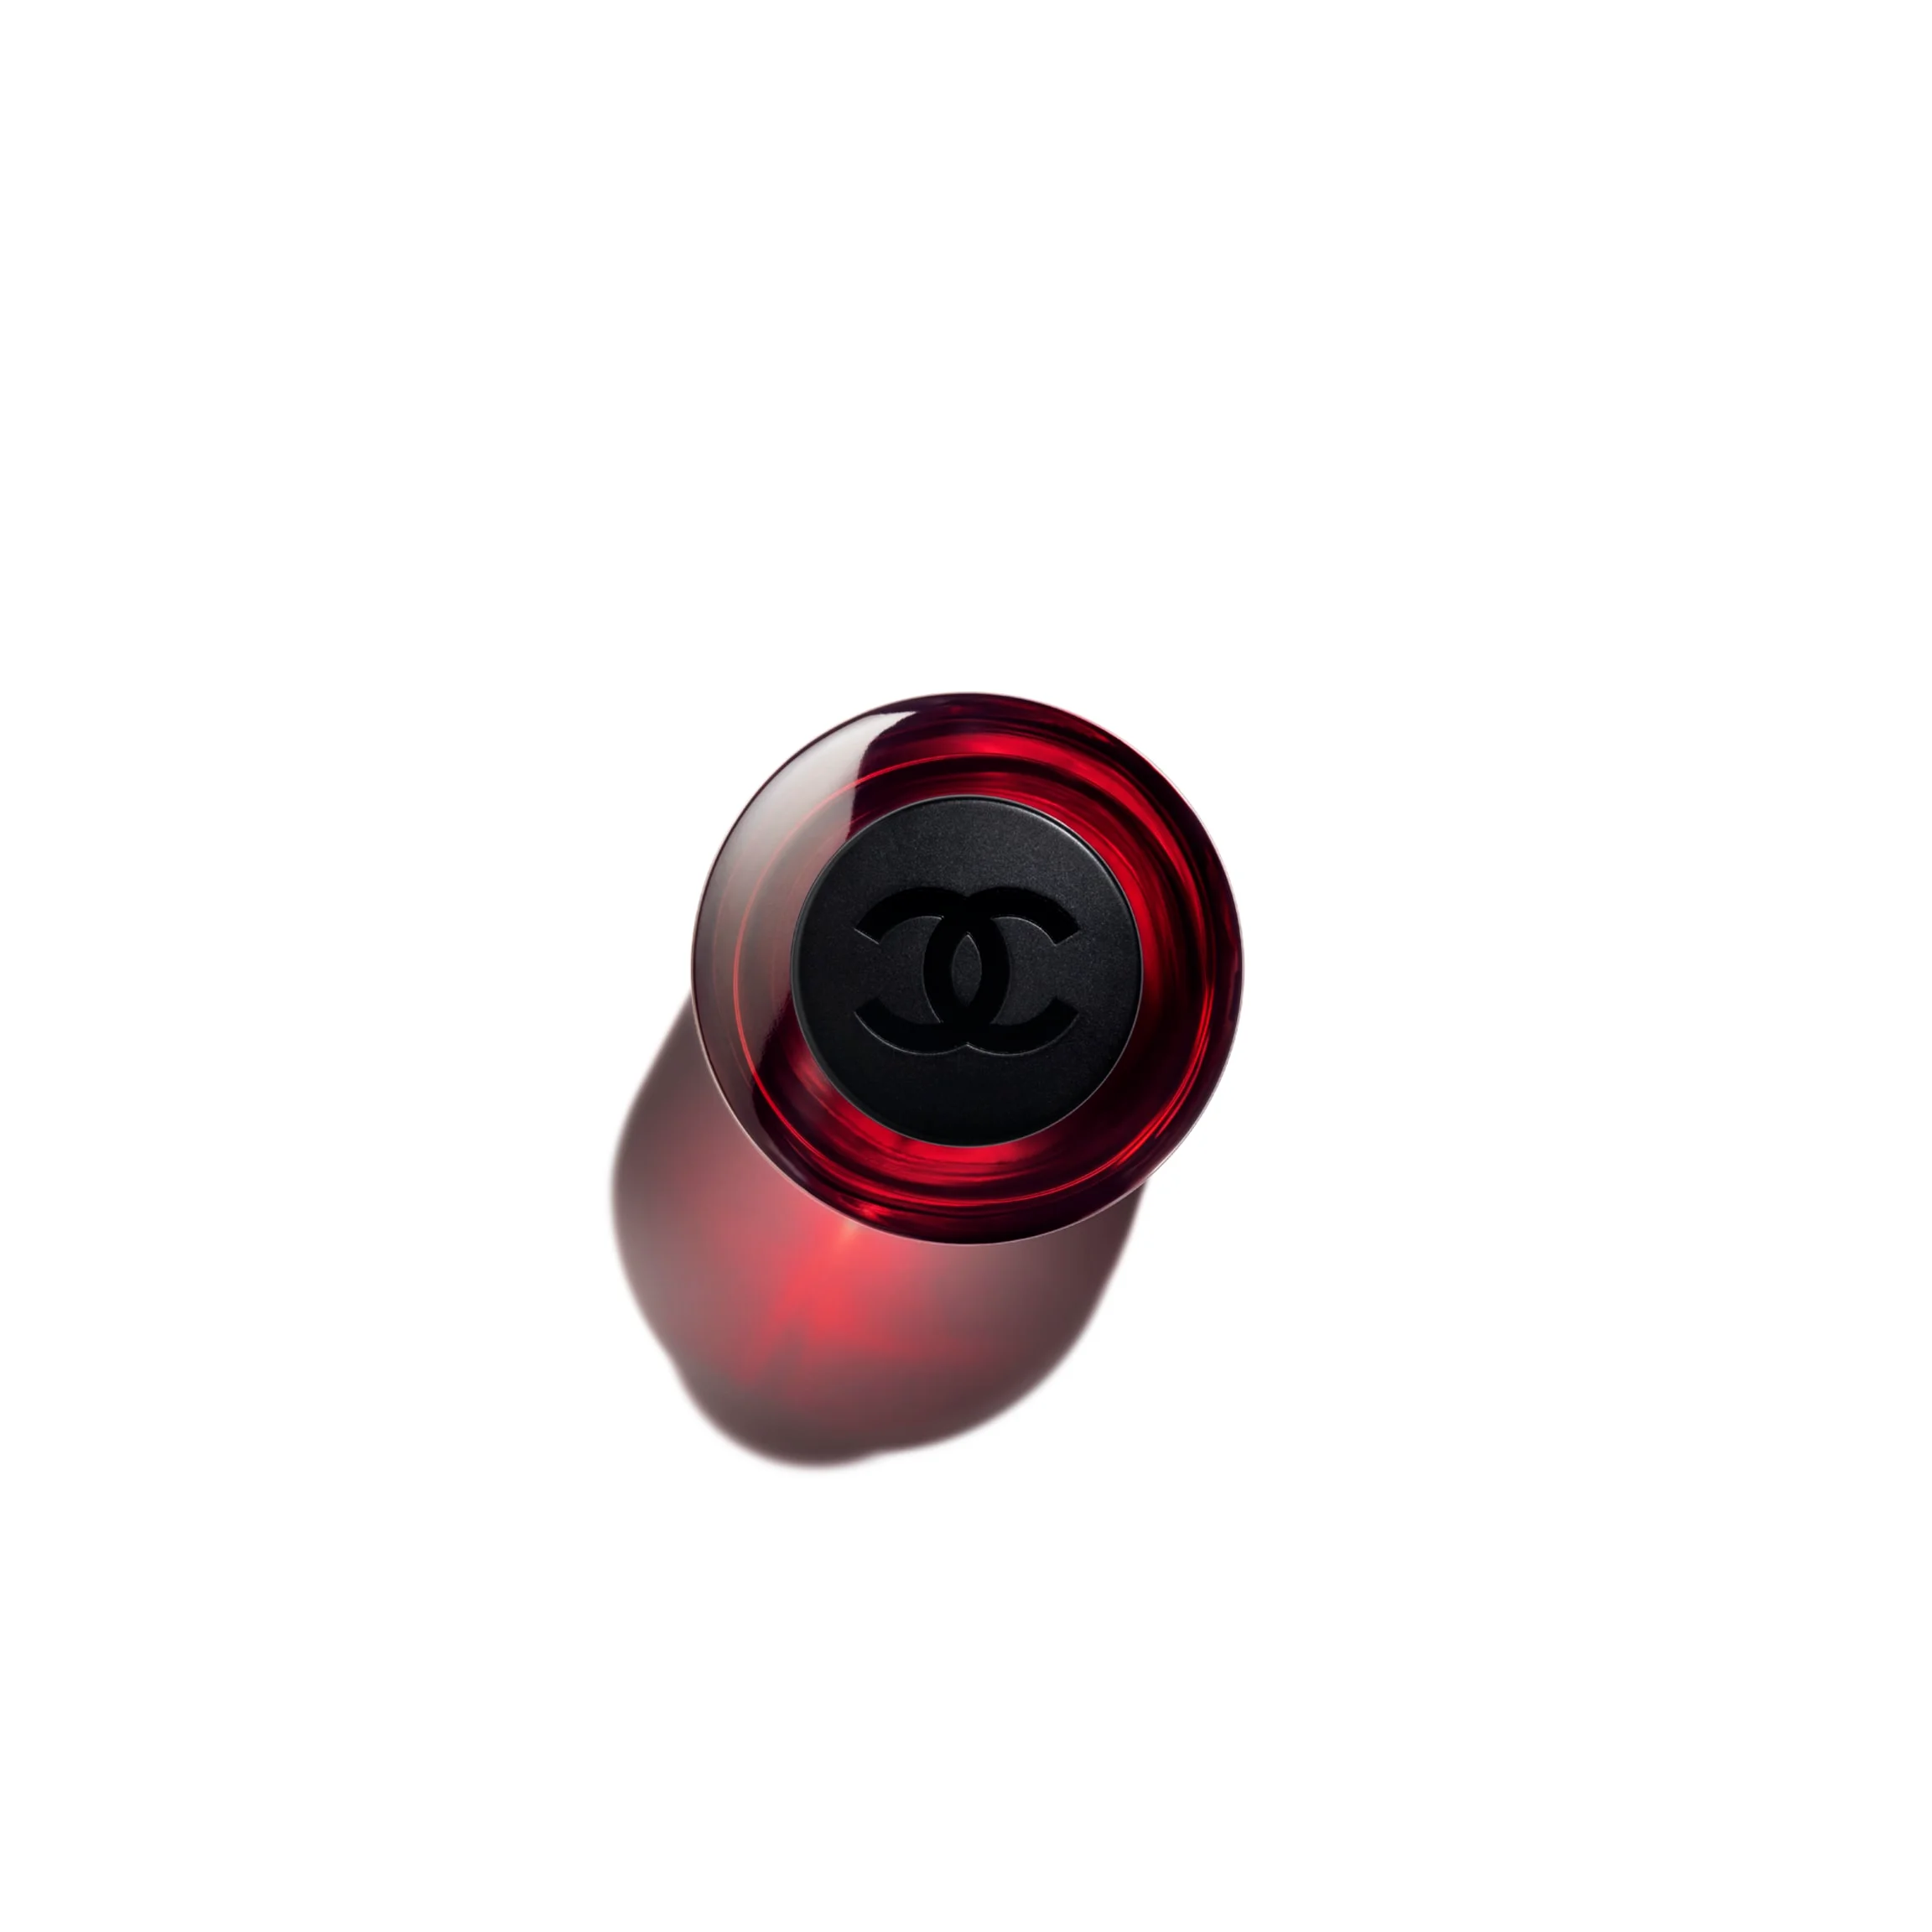 New: N°1 de Chanel L'Eau Rouge Chanel by - WikiScents